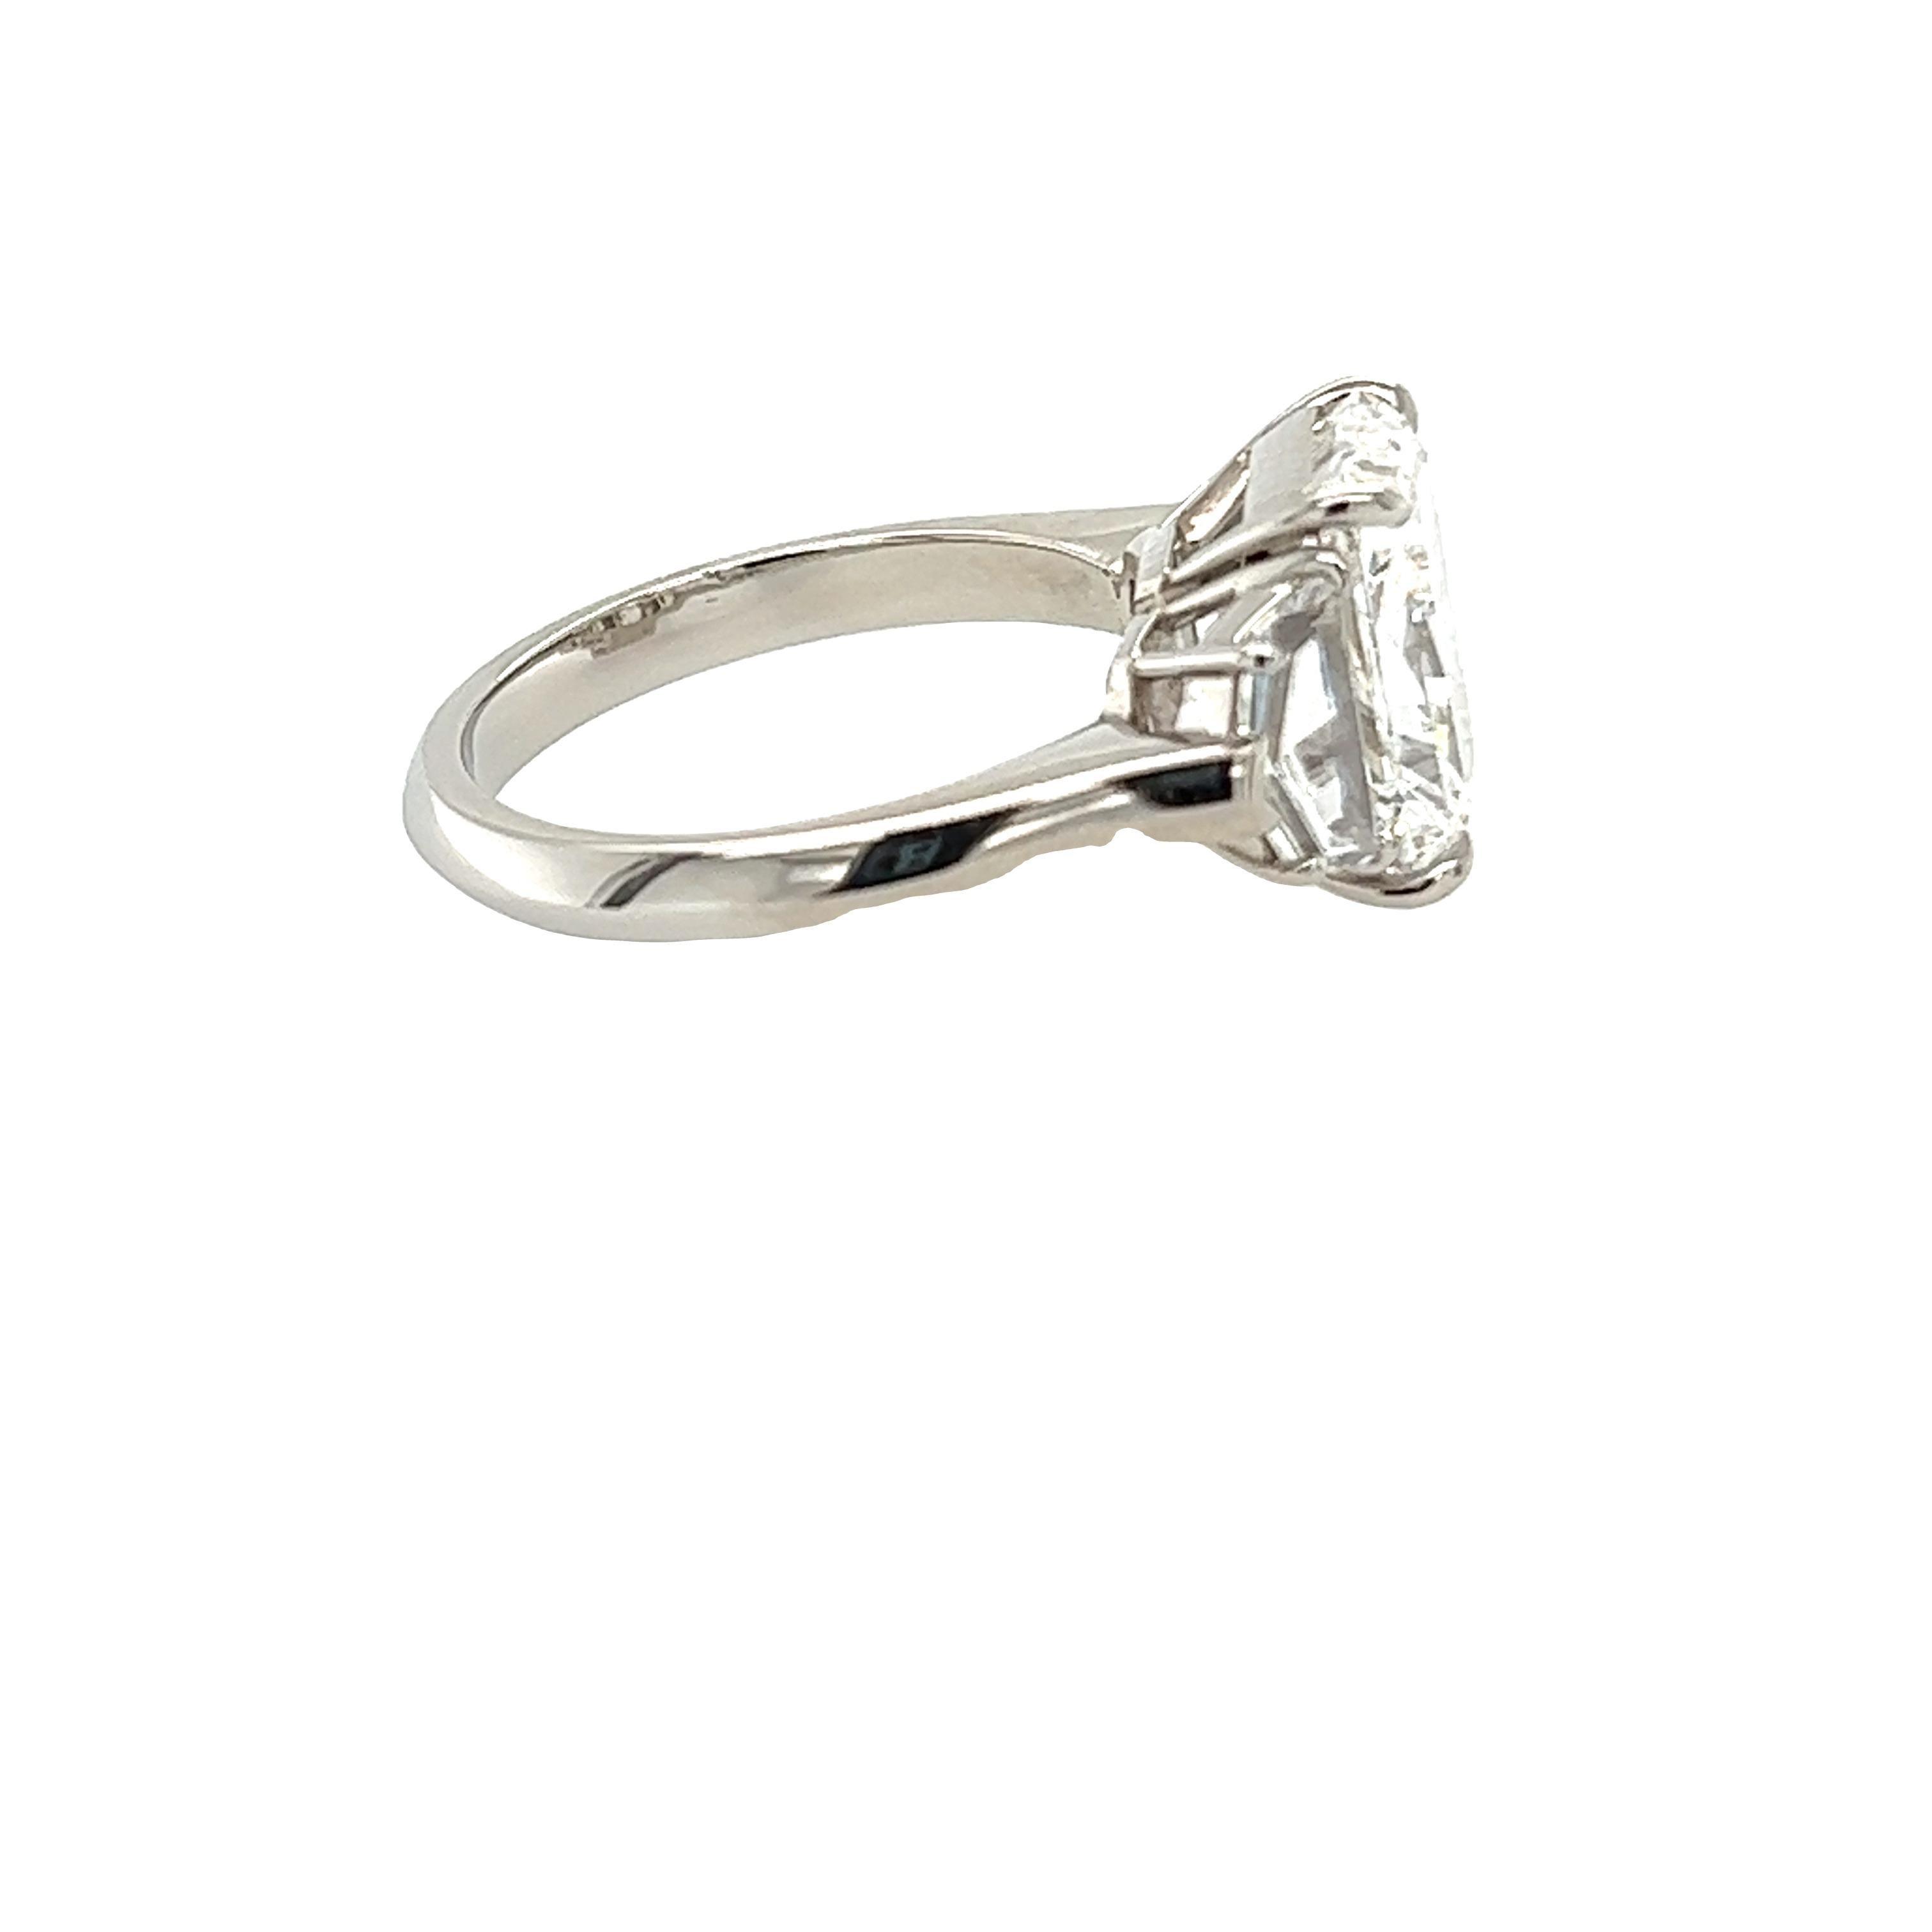 5 carat natural diamond ring